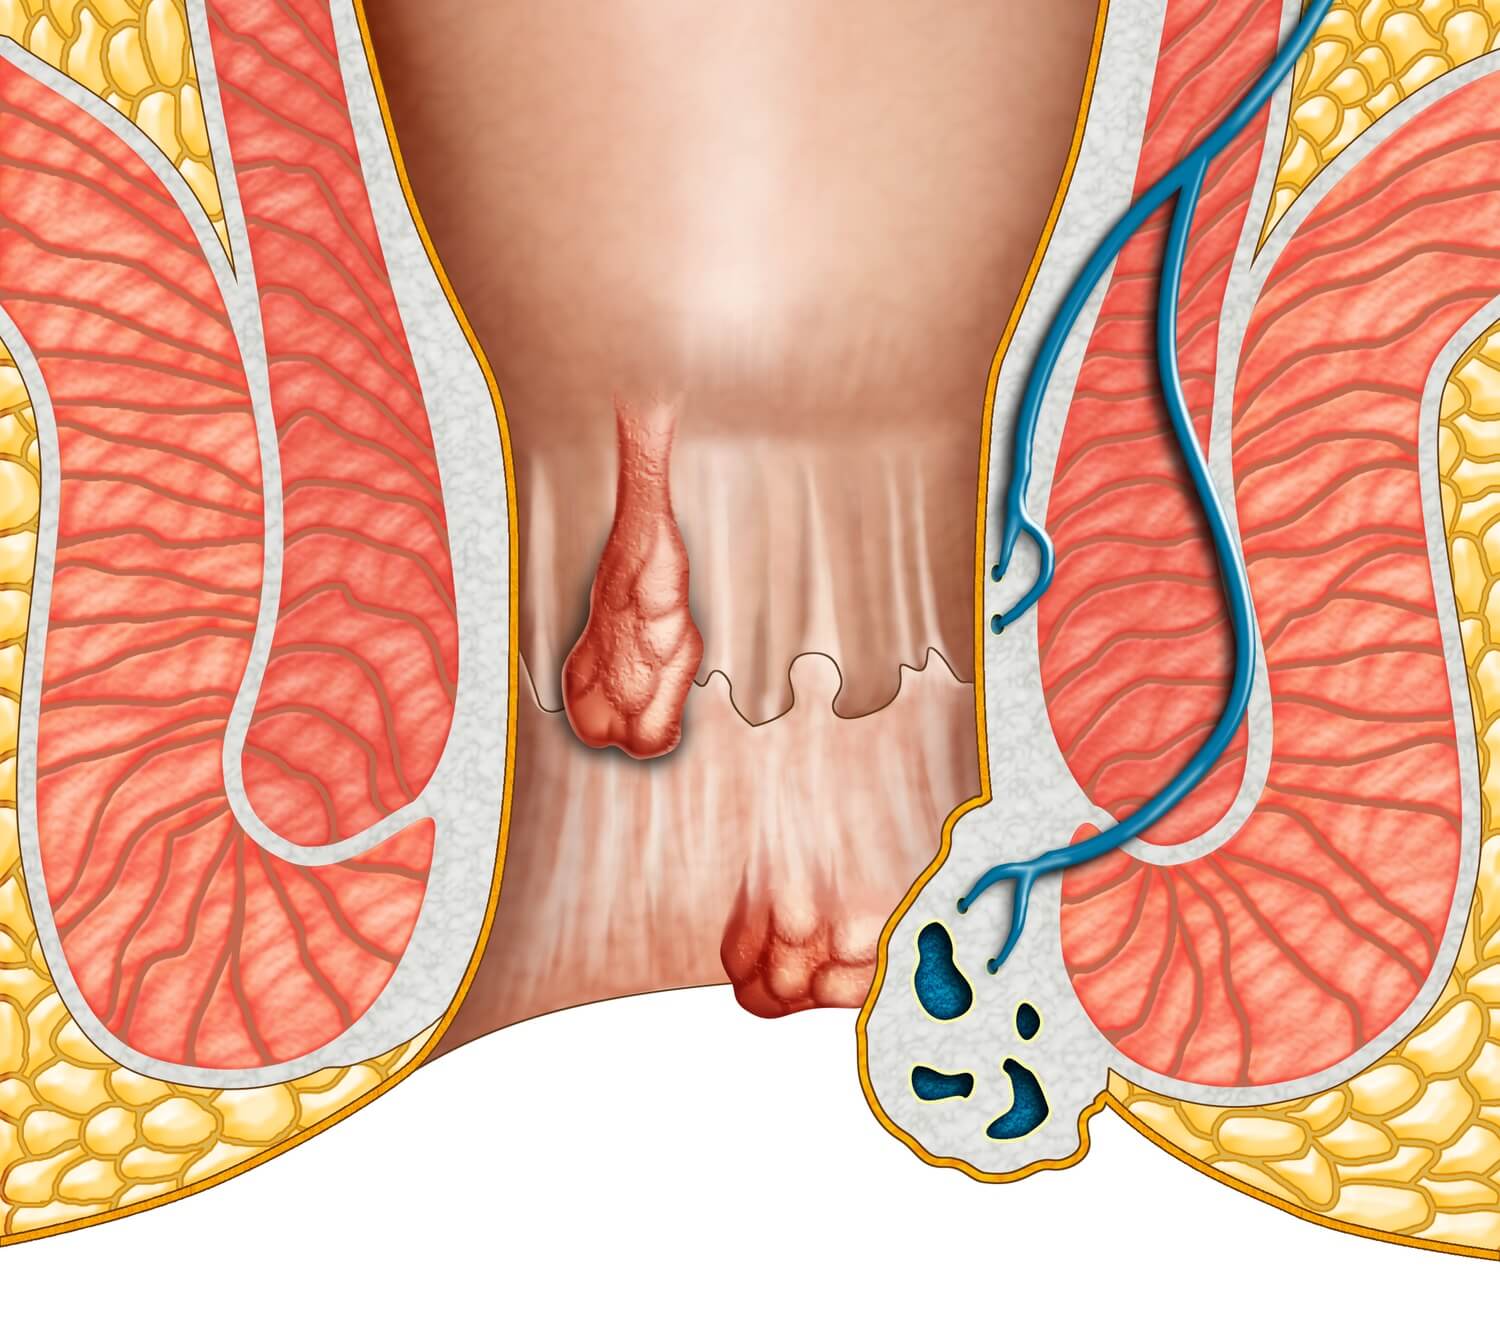 Anatomical drawing showing internal and external hemorrhoids. Digital illustration.